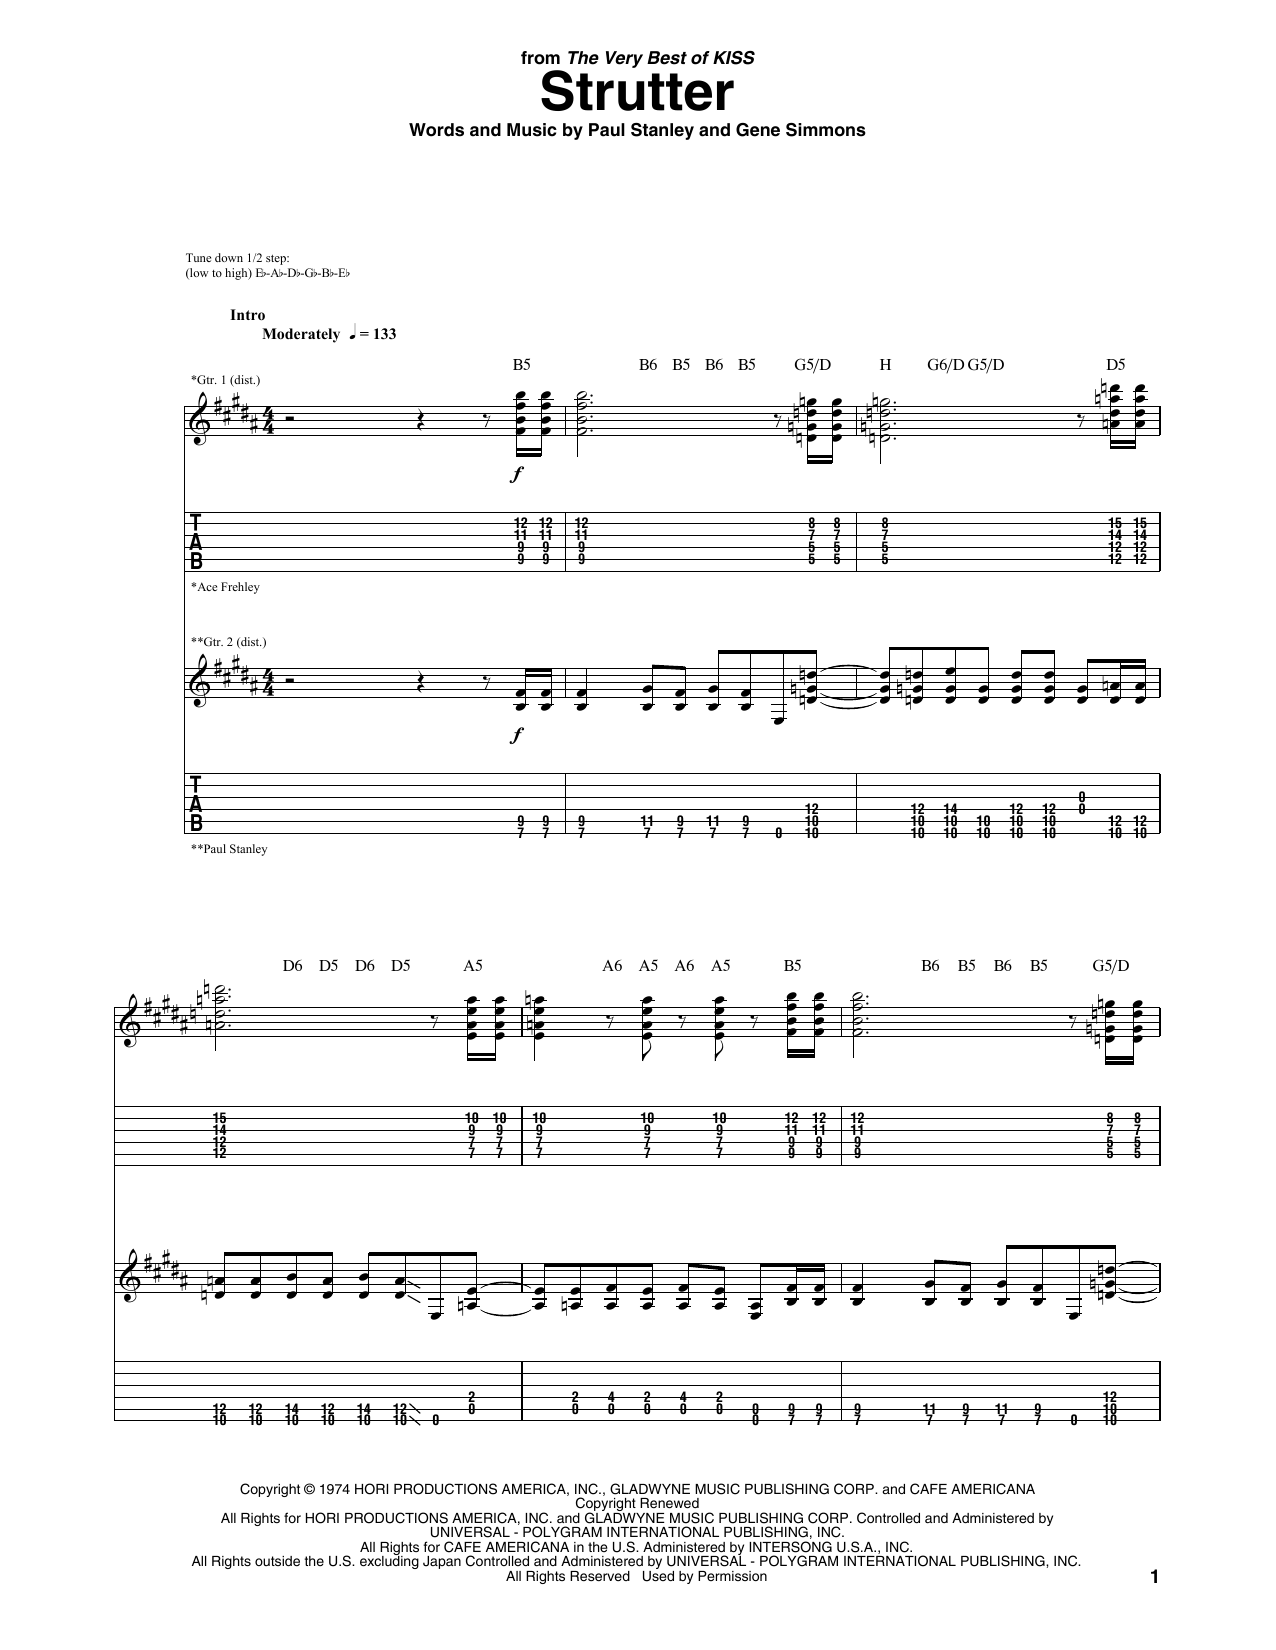 KISS Strutter sheet music notes and chords arranged for Guitar Chords/Lyrics